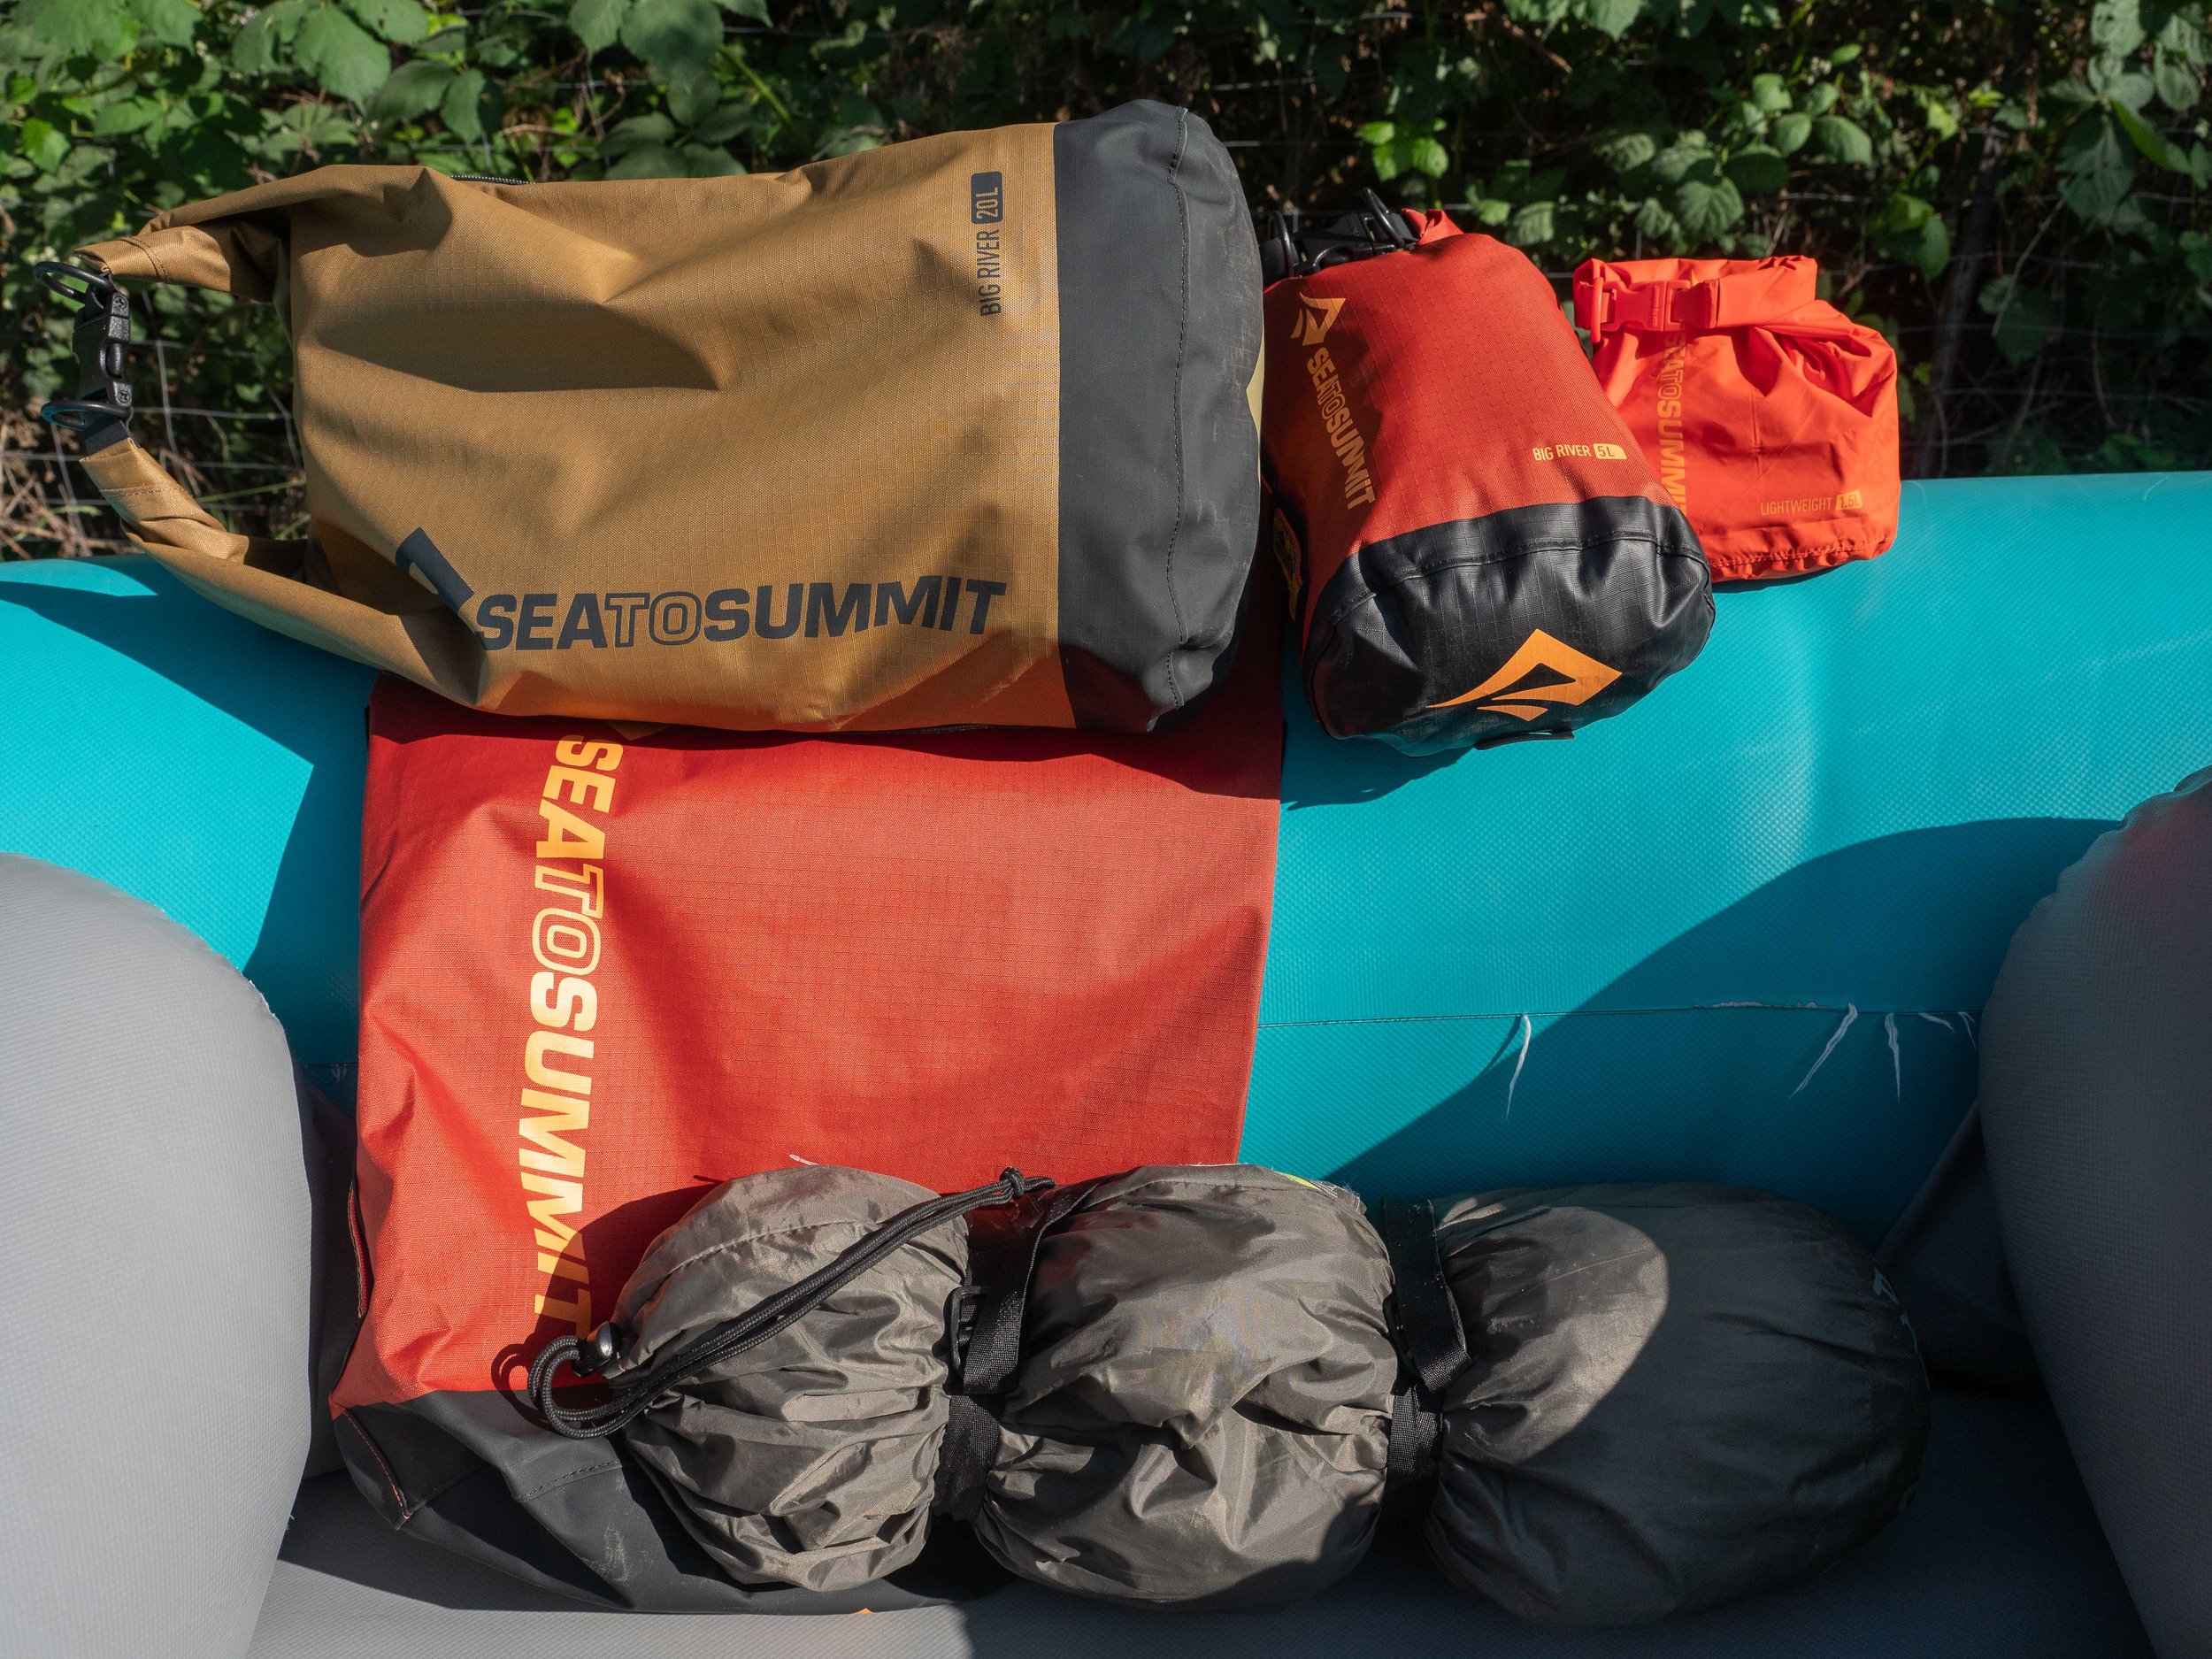 Sea to Summit Big River Dry Bag - Stuff sack